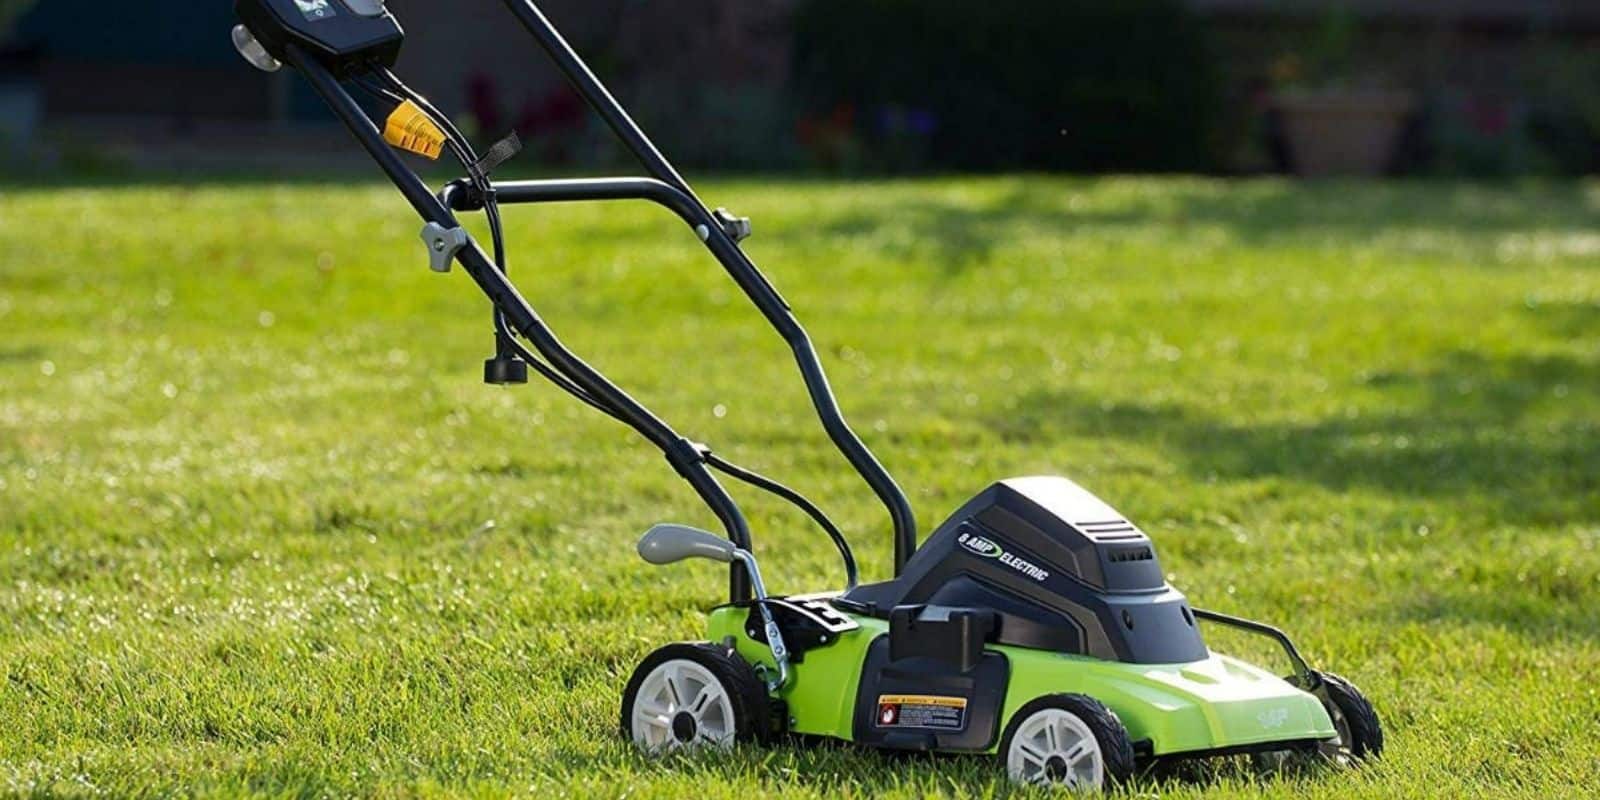 Best worx landroid robotic lawn mower 1